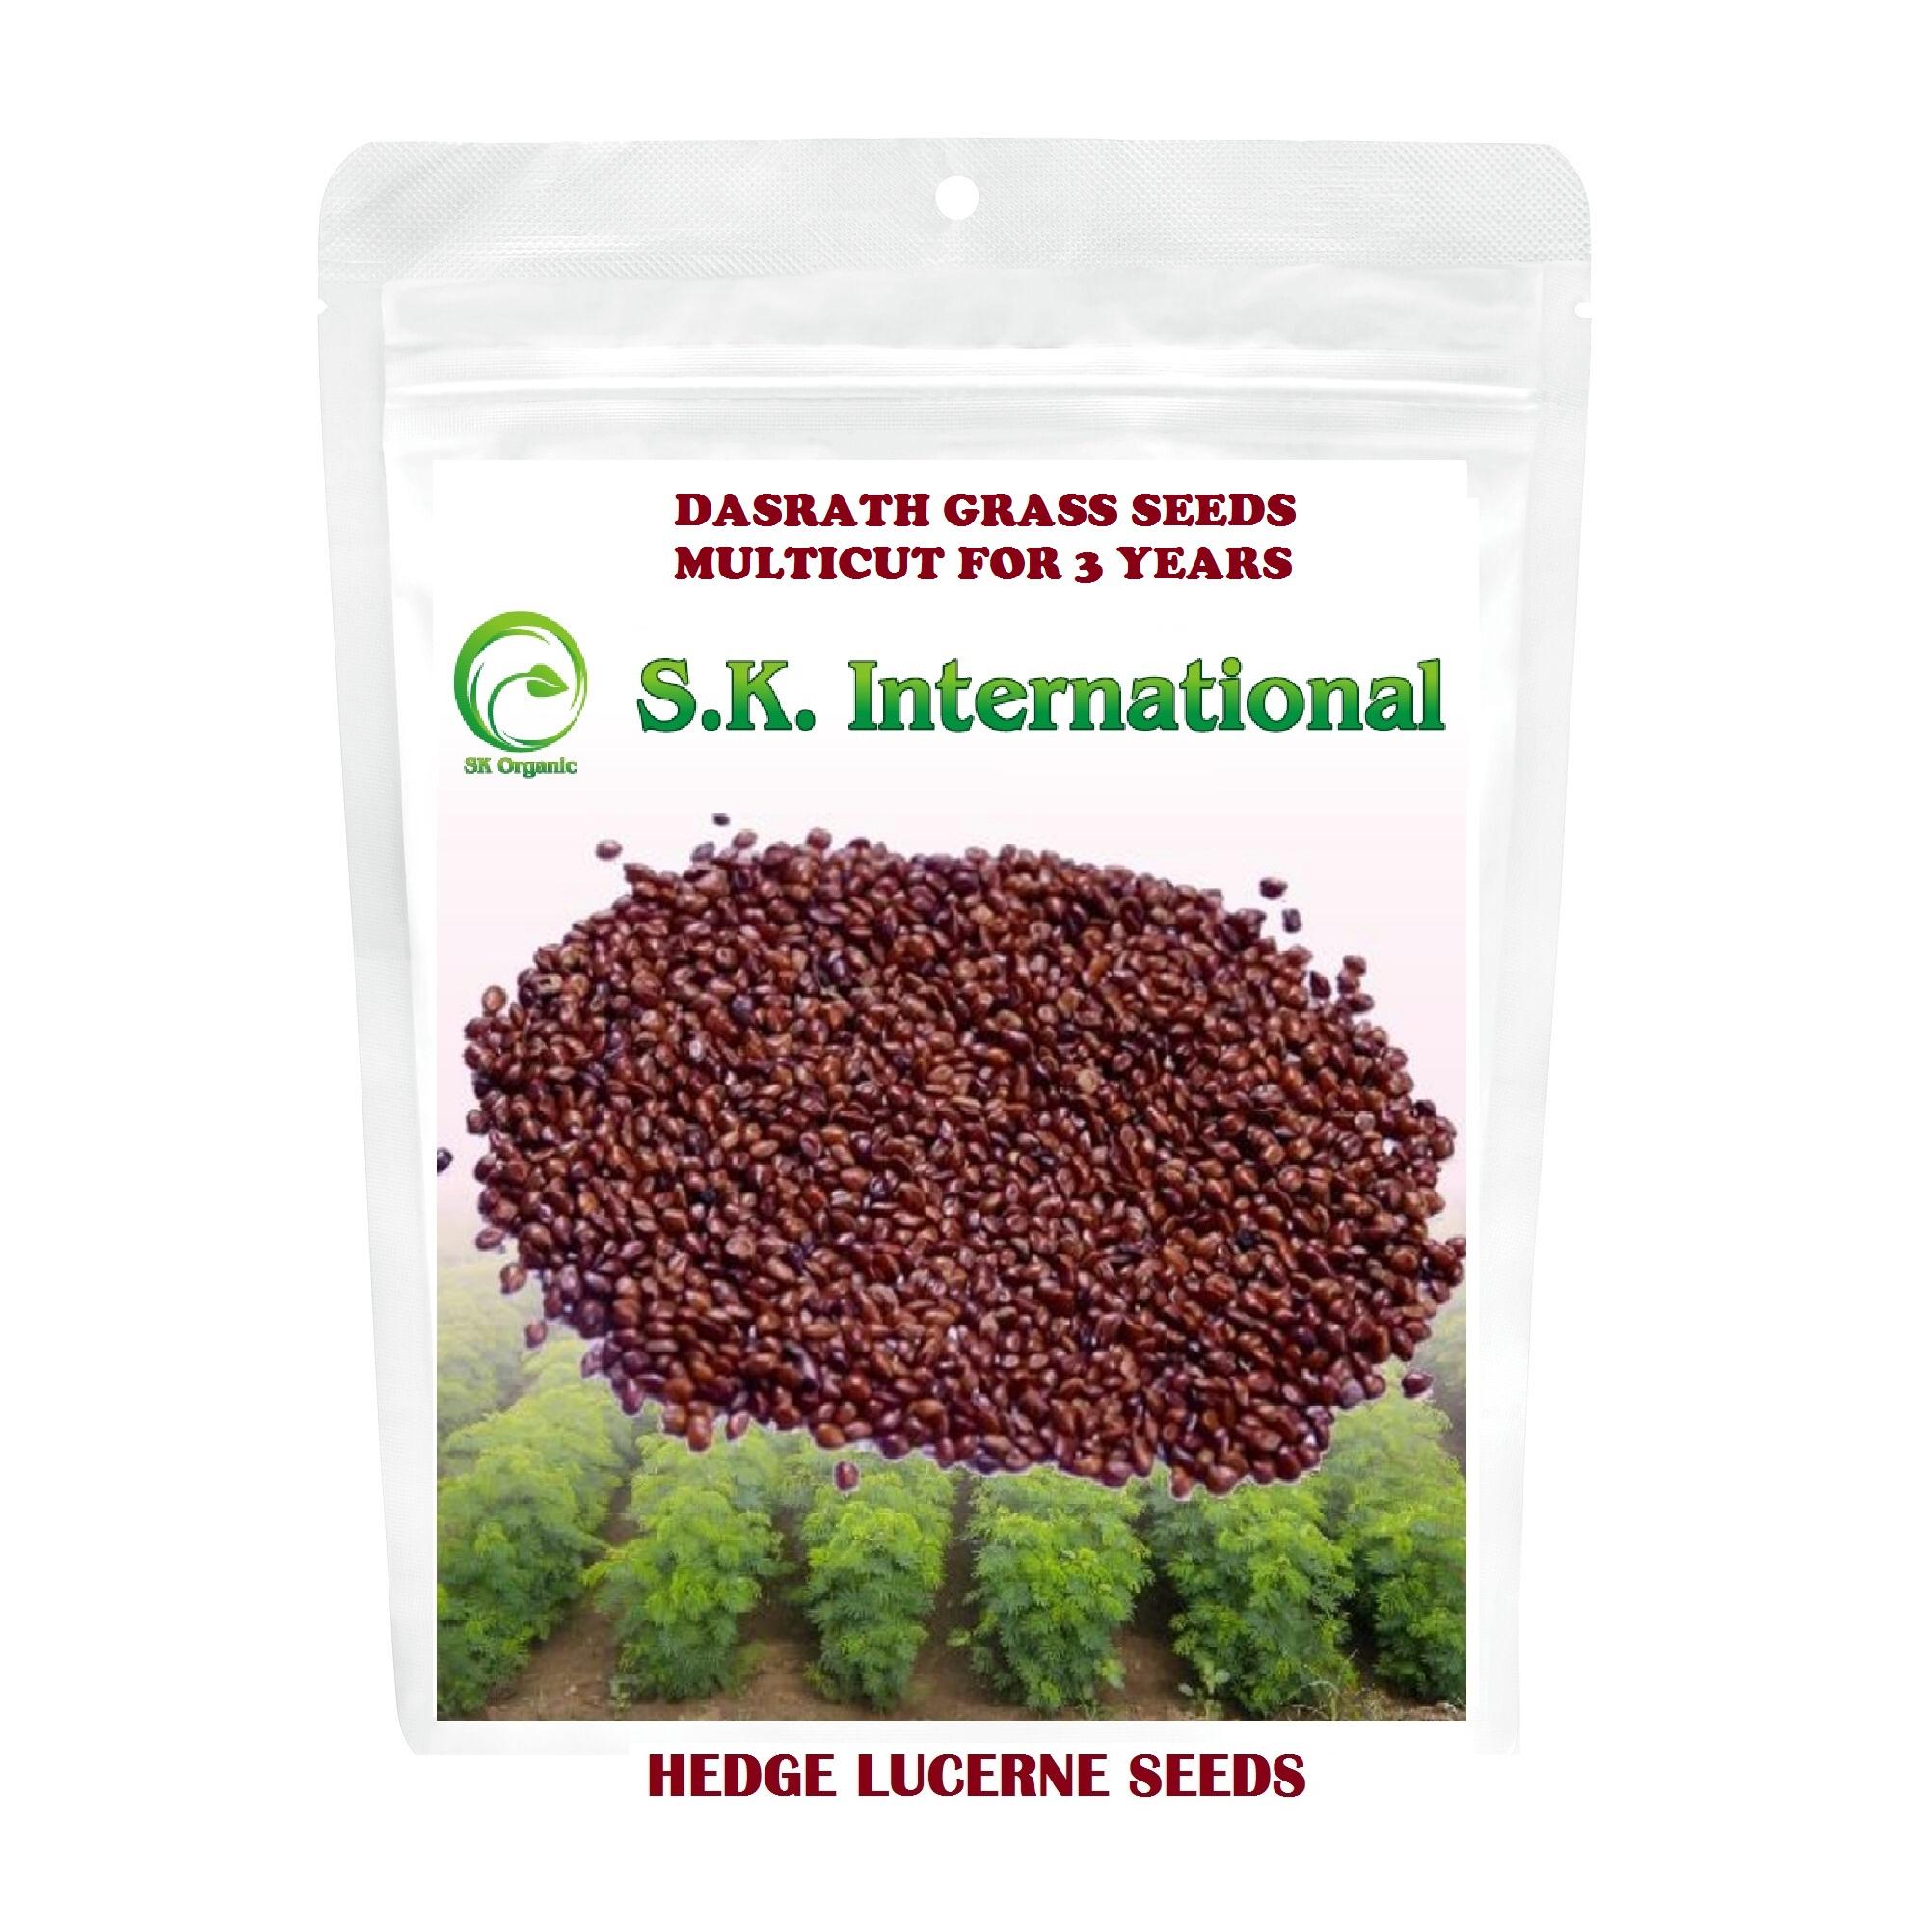 SK ORGANIC Dasrath Grass Seeds ( Hedge Lurcerne Seeds) for 3 years multicut